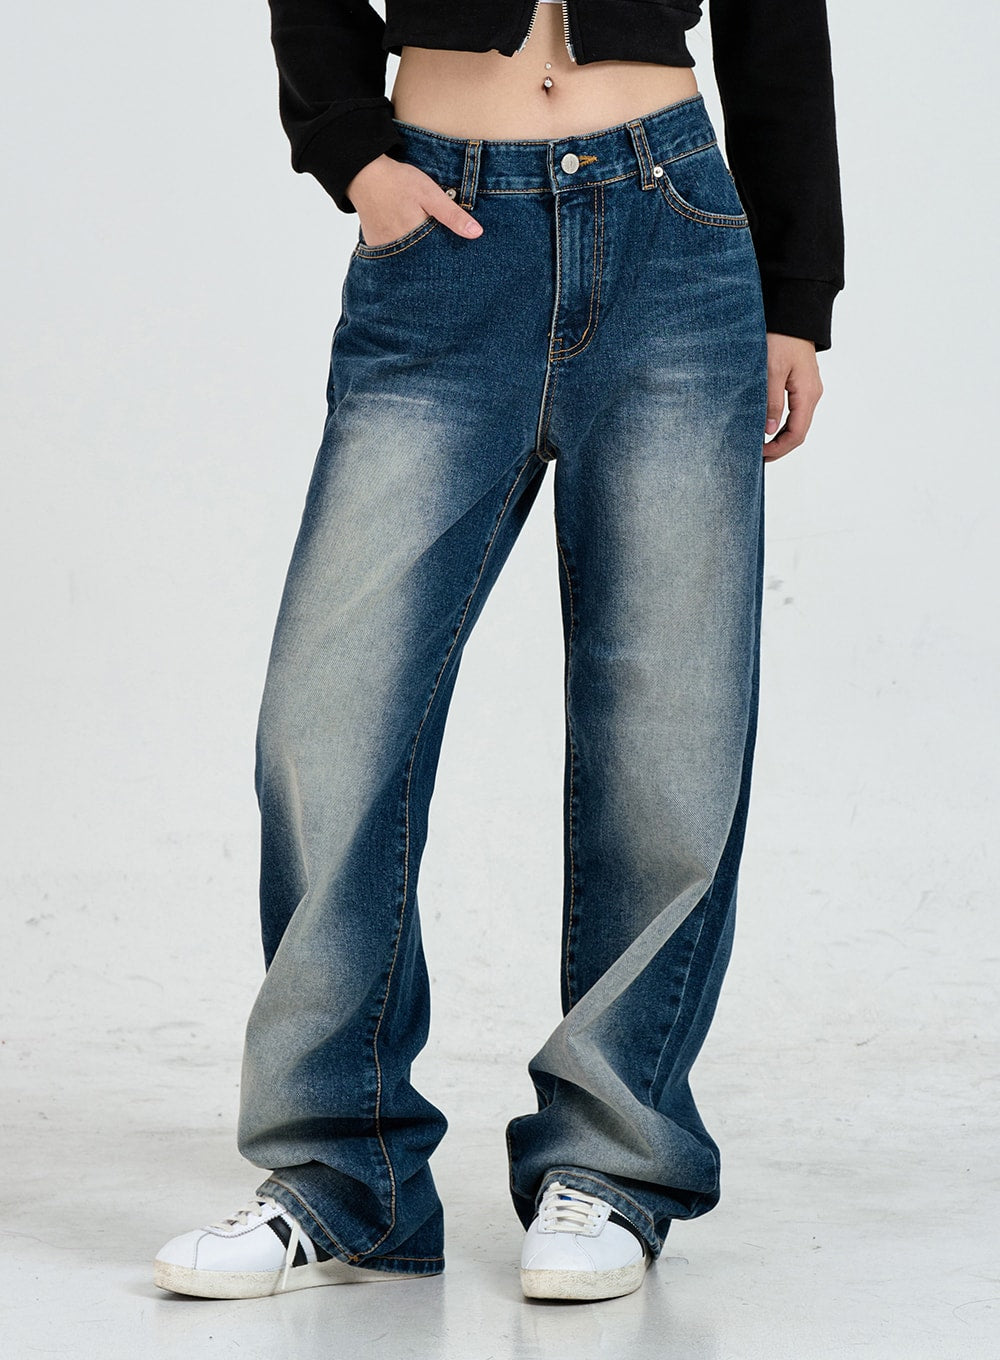 Men's Wide Faded Jeans - Bustins Jeans